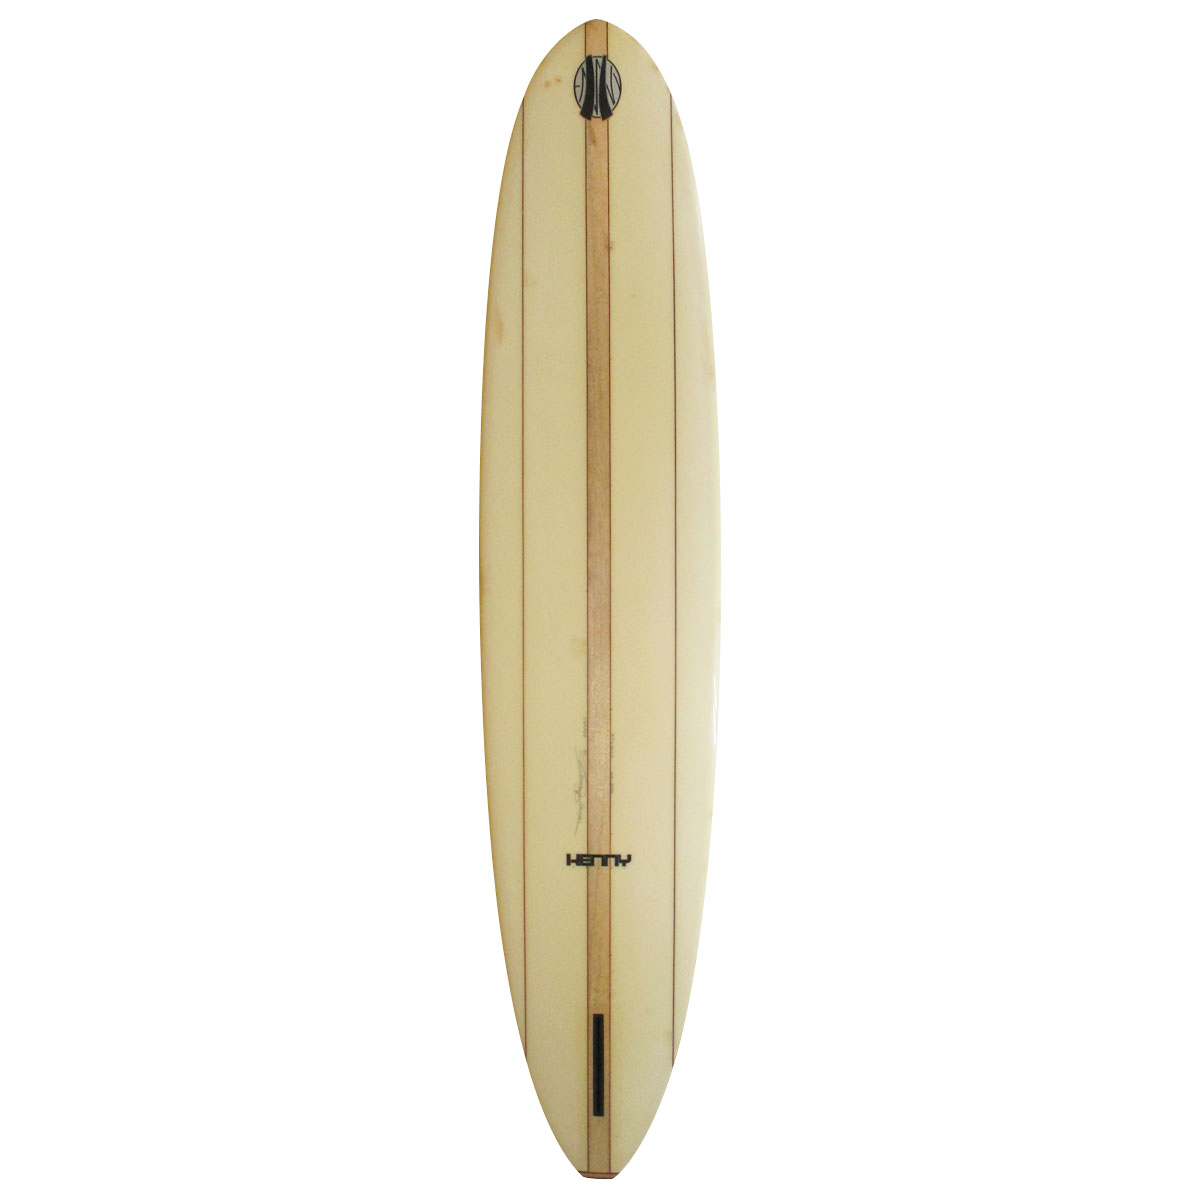 KENNY SURFBOARDS / GLIDER 9`7